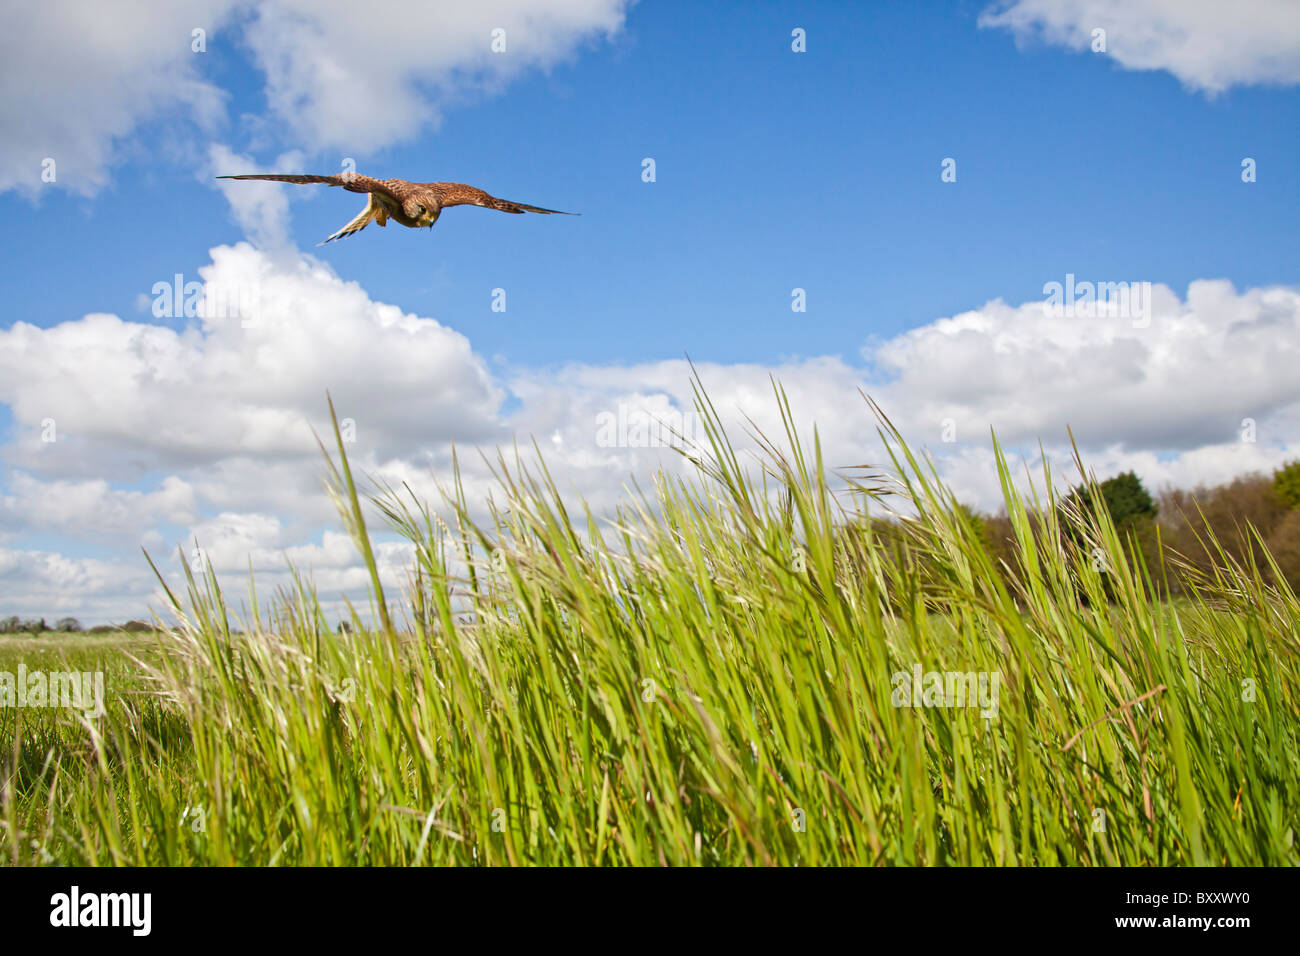 Il Gheppio (Falco tinnunculus ) caccia femmina su erba lunga Foto Stock